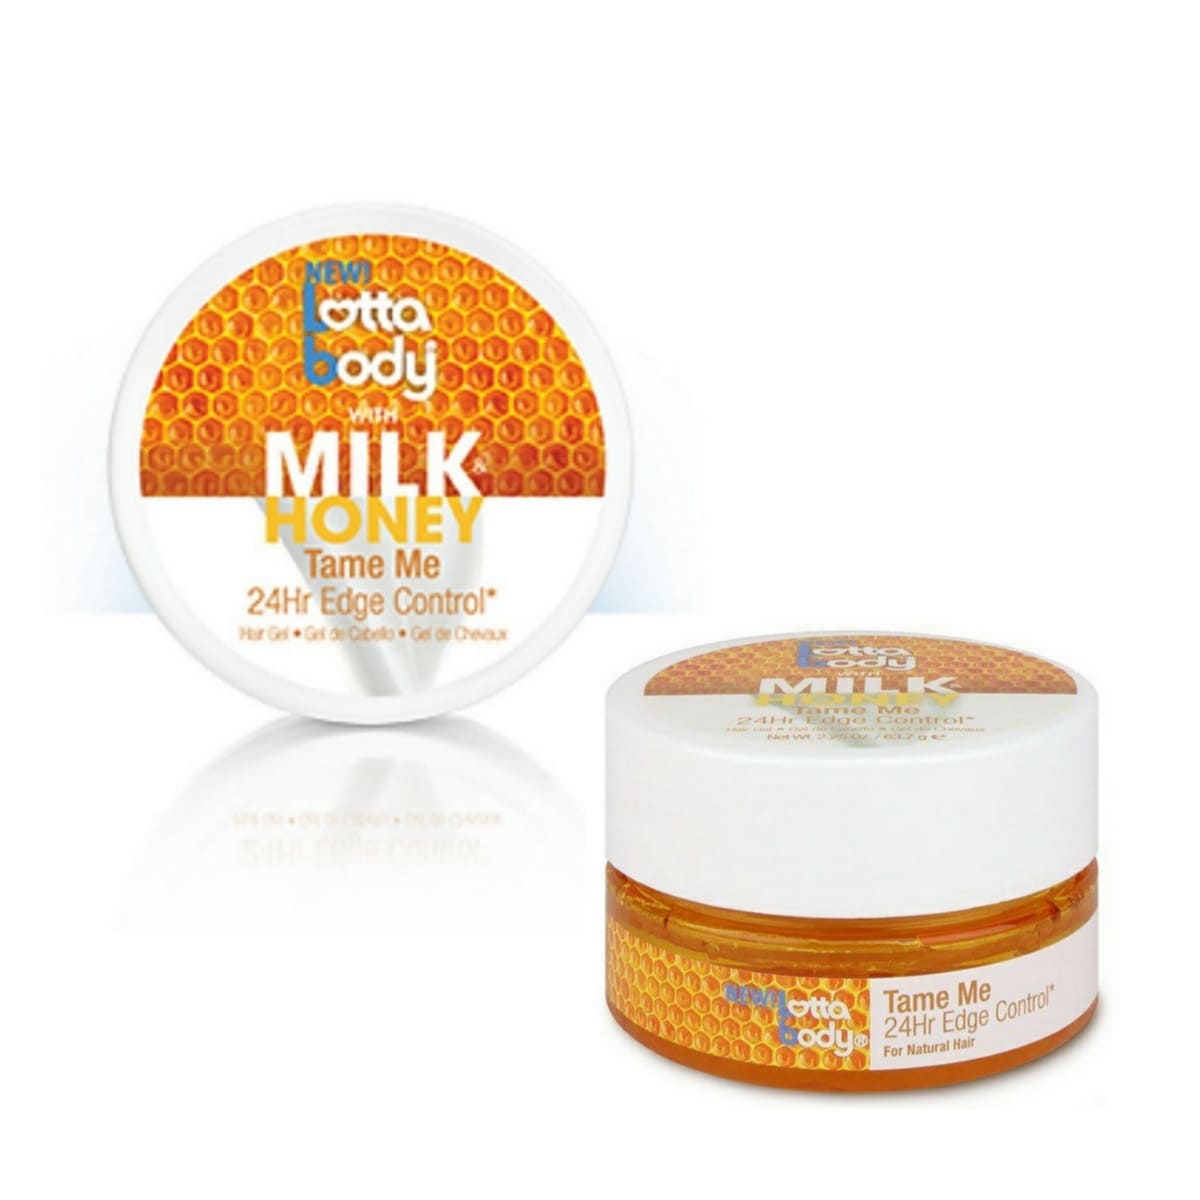 comprar-cosmetico-vegano-gel-milk-&-honey-edge-control-24-lottabody-metodo-curly-trenzas-crochet-pelucas-www.muerebella.com